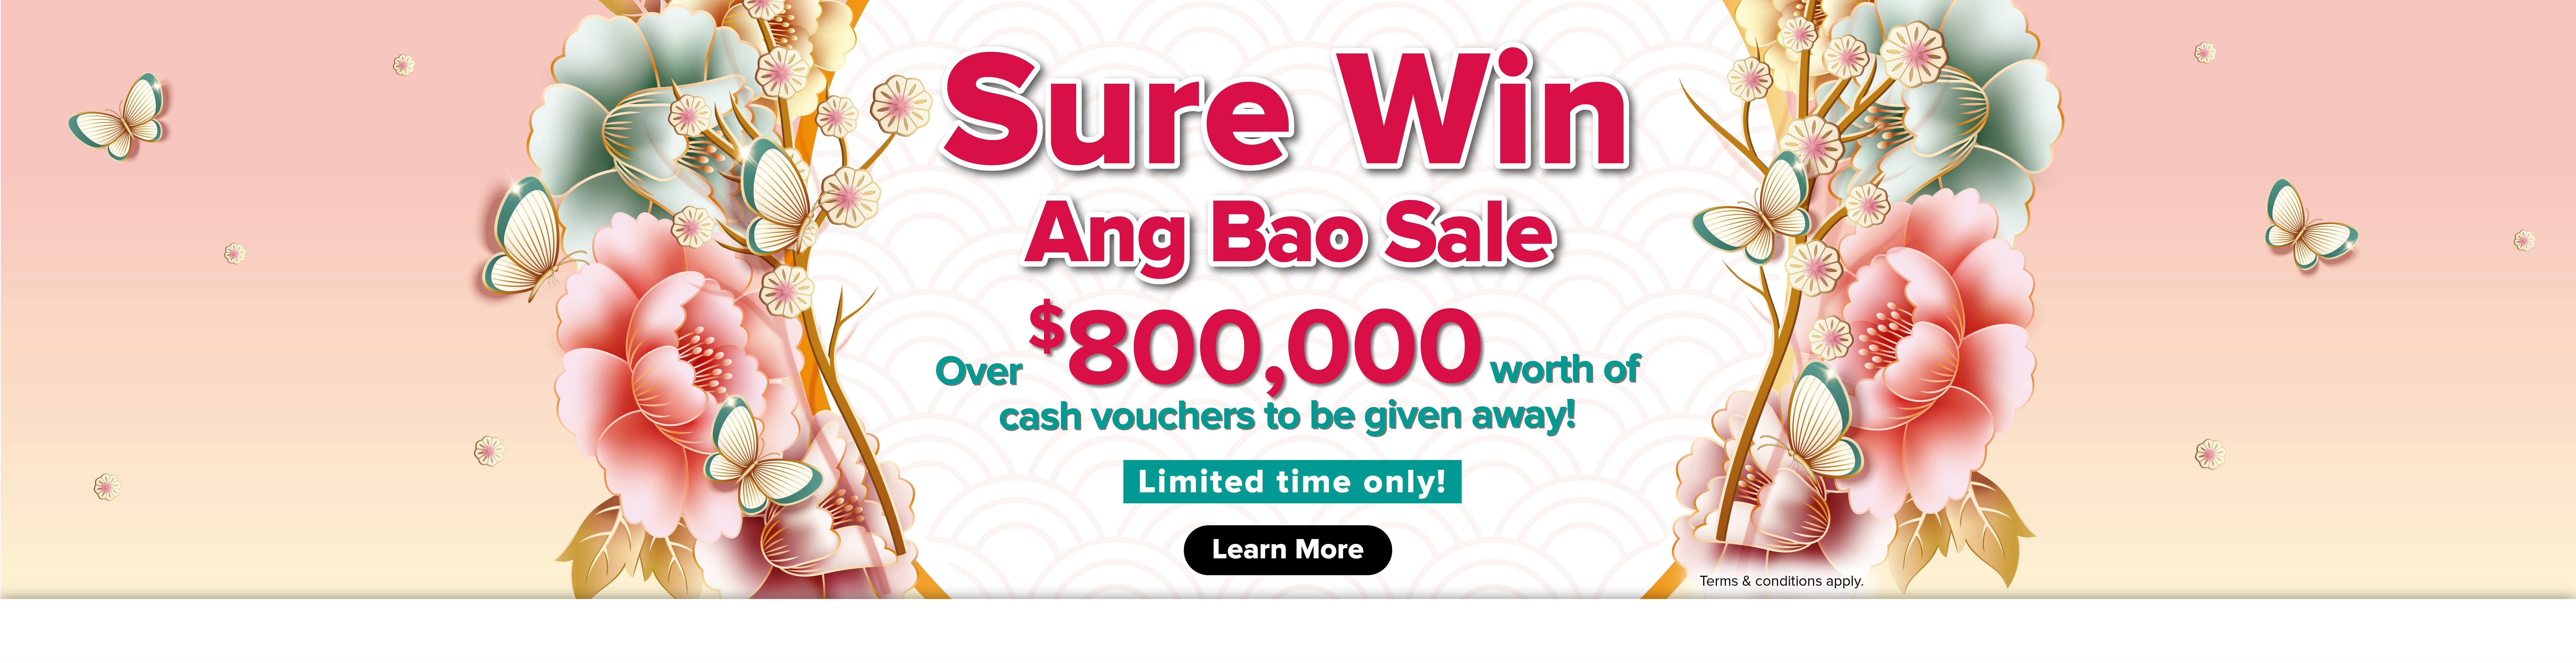 Sure Win Ang Bao Sale (6 to 19 Jan 2022) - Desktop Banner